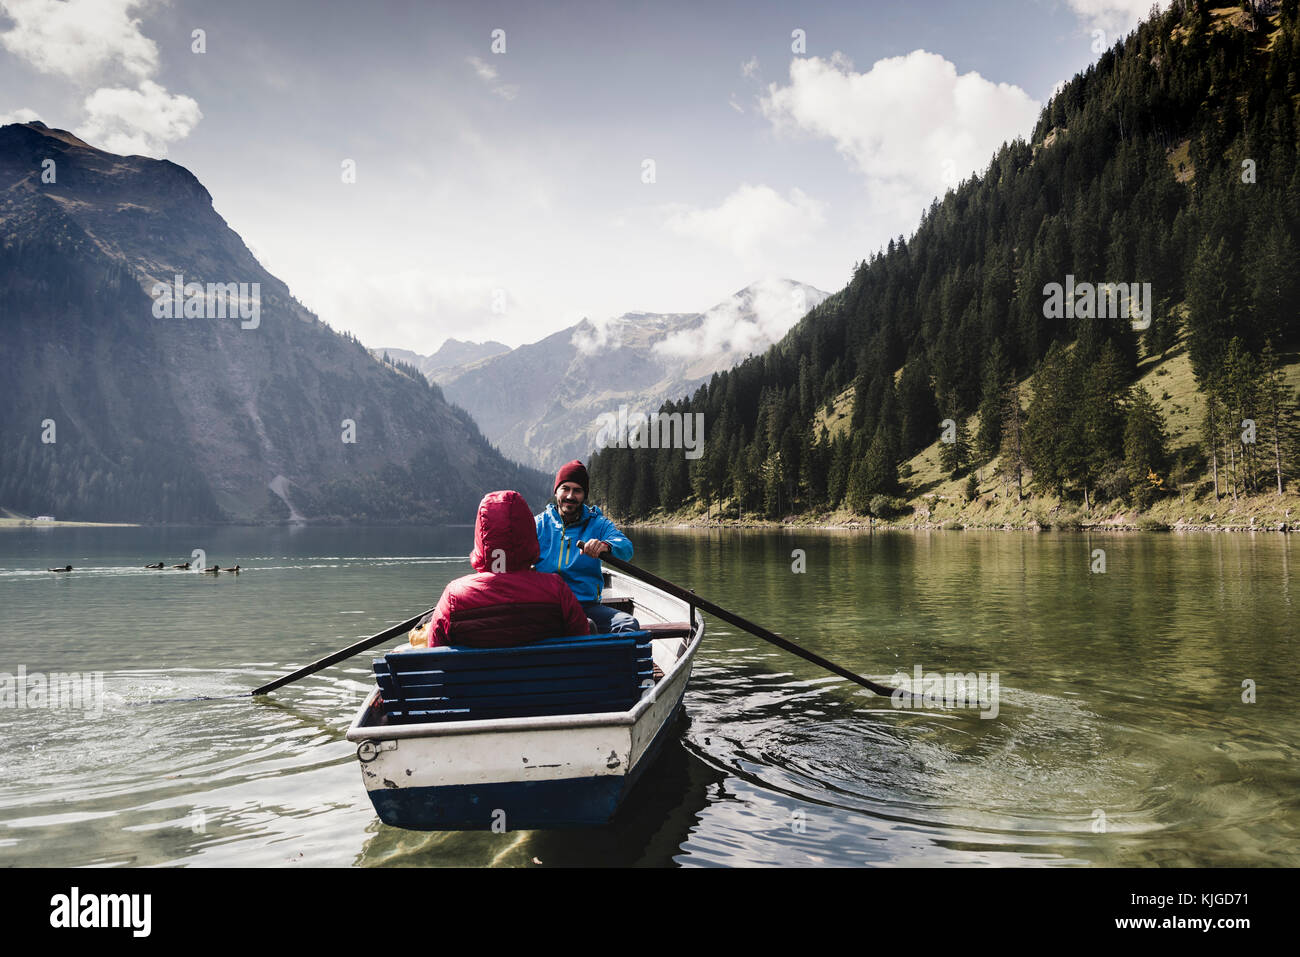 Austria, Tyrol, Alps, couple in rowing boat on mountain lake Stock Photo